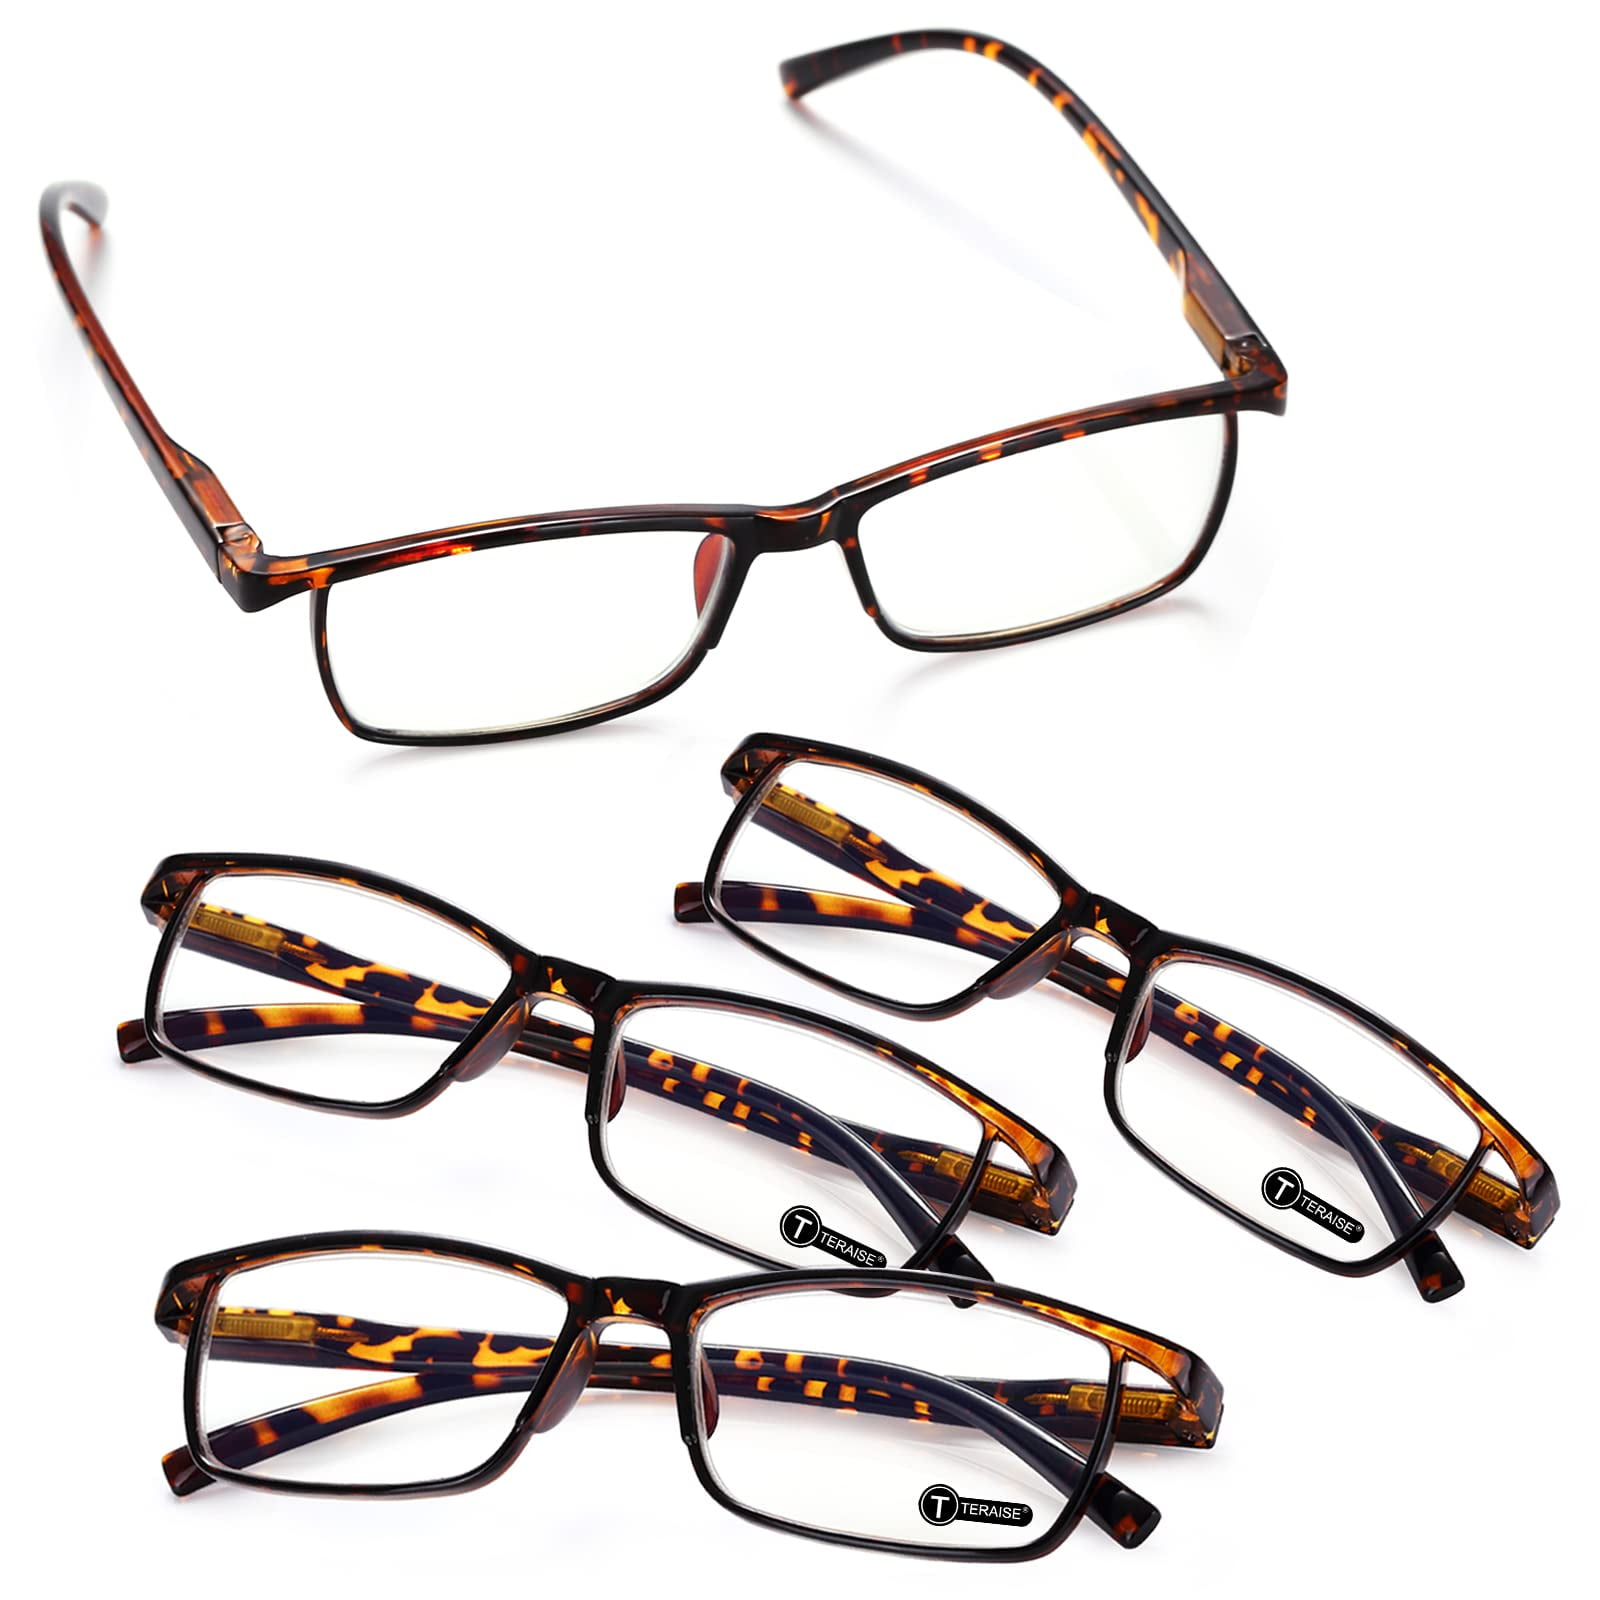 TERAISE 4 Pairs Fashion Anti-Blue-ray Reading Glasses for Women and Reduce Eyestrain Protect Eyesight 